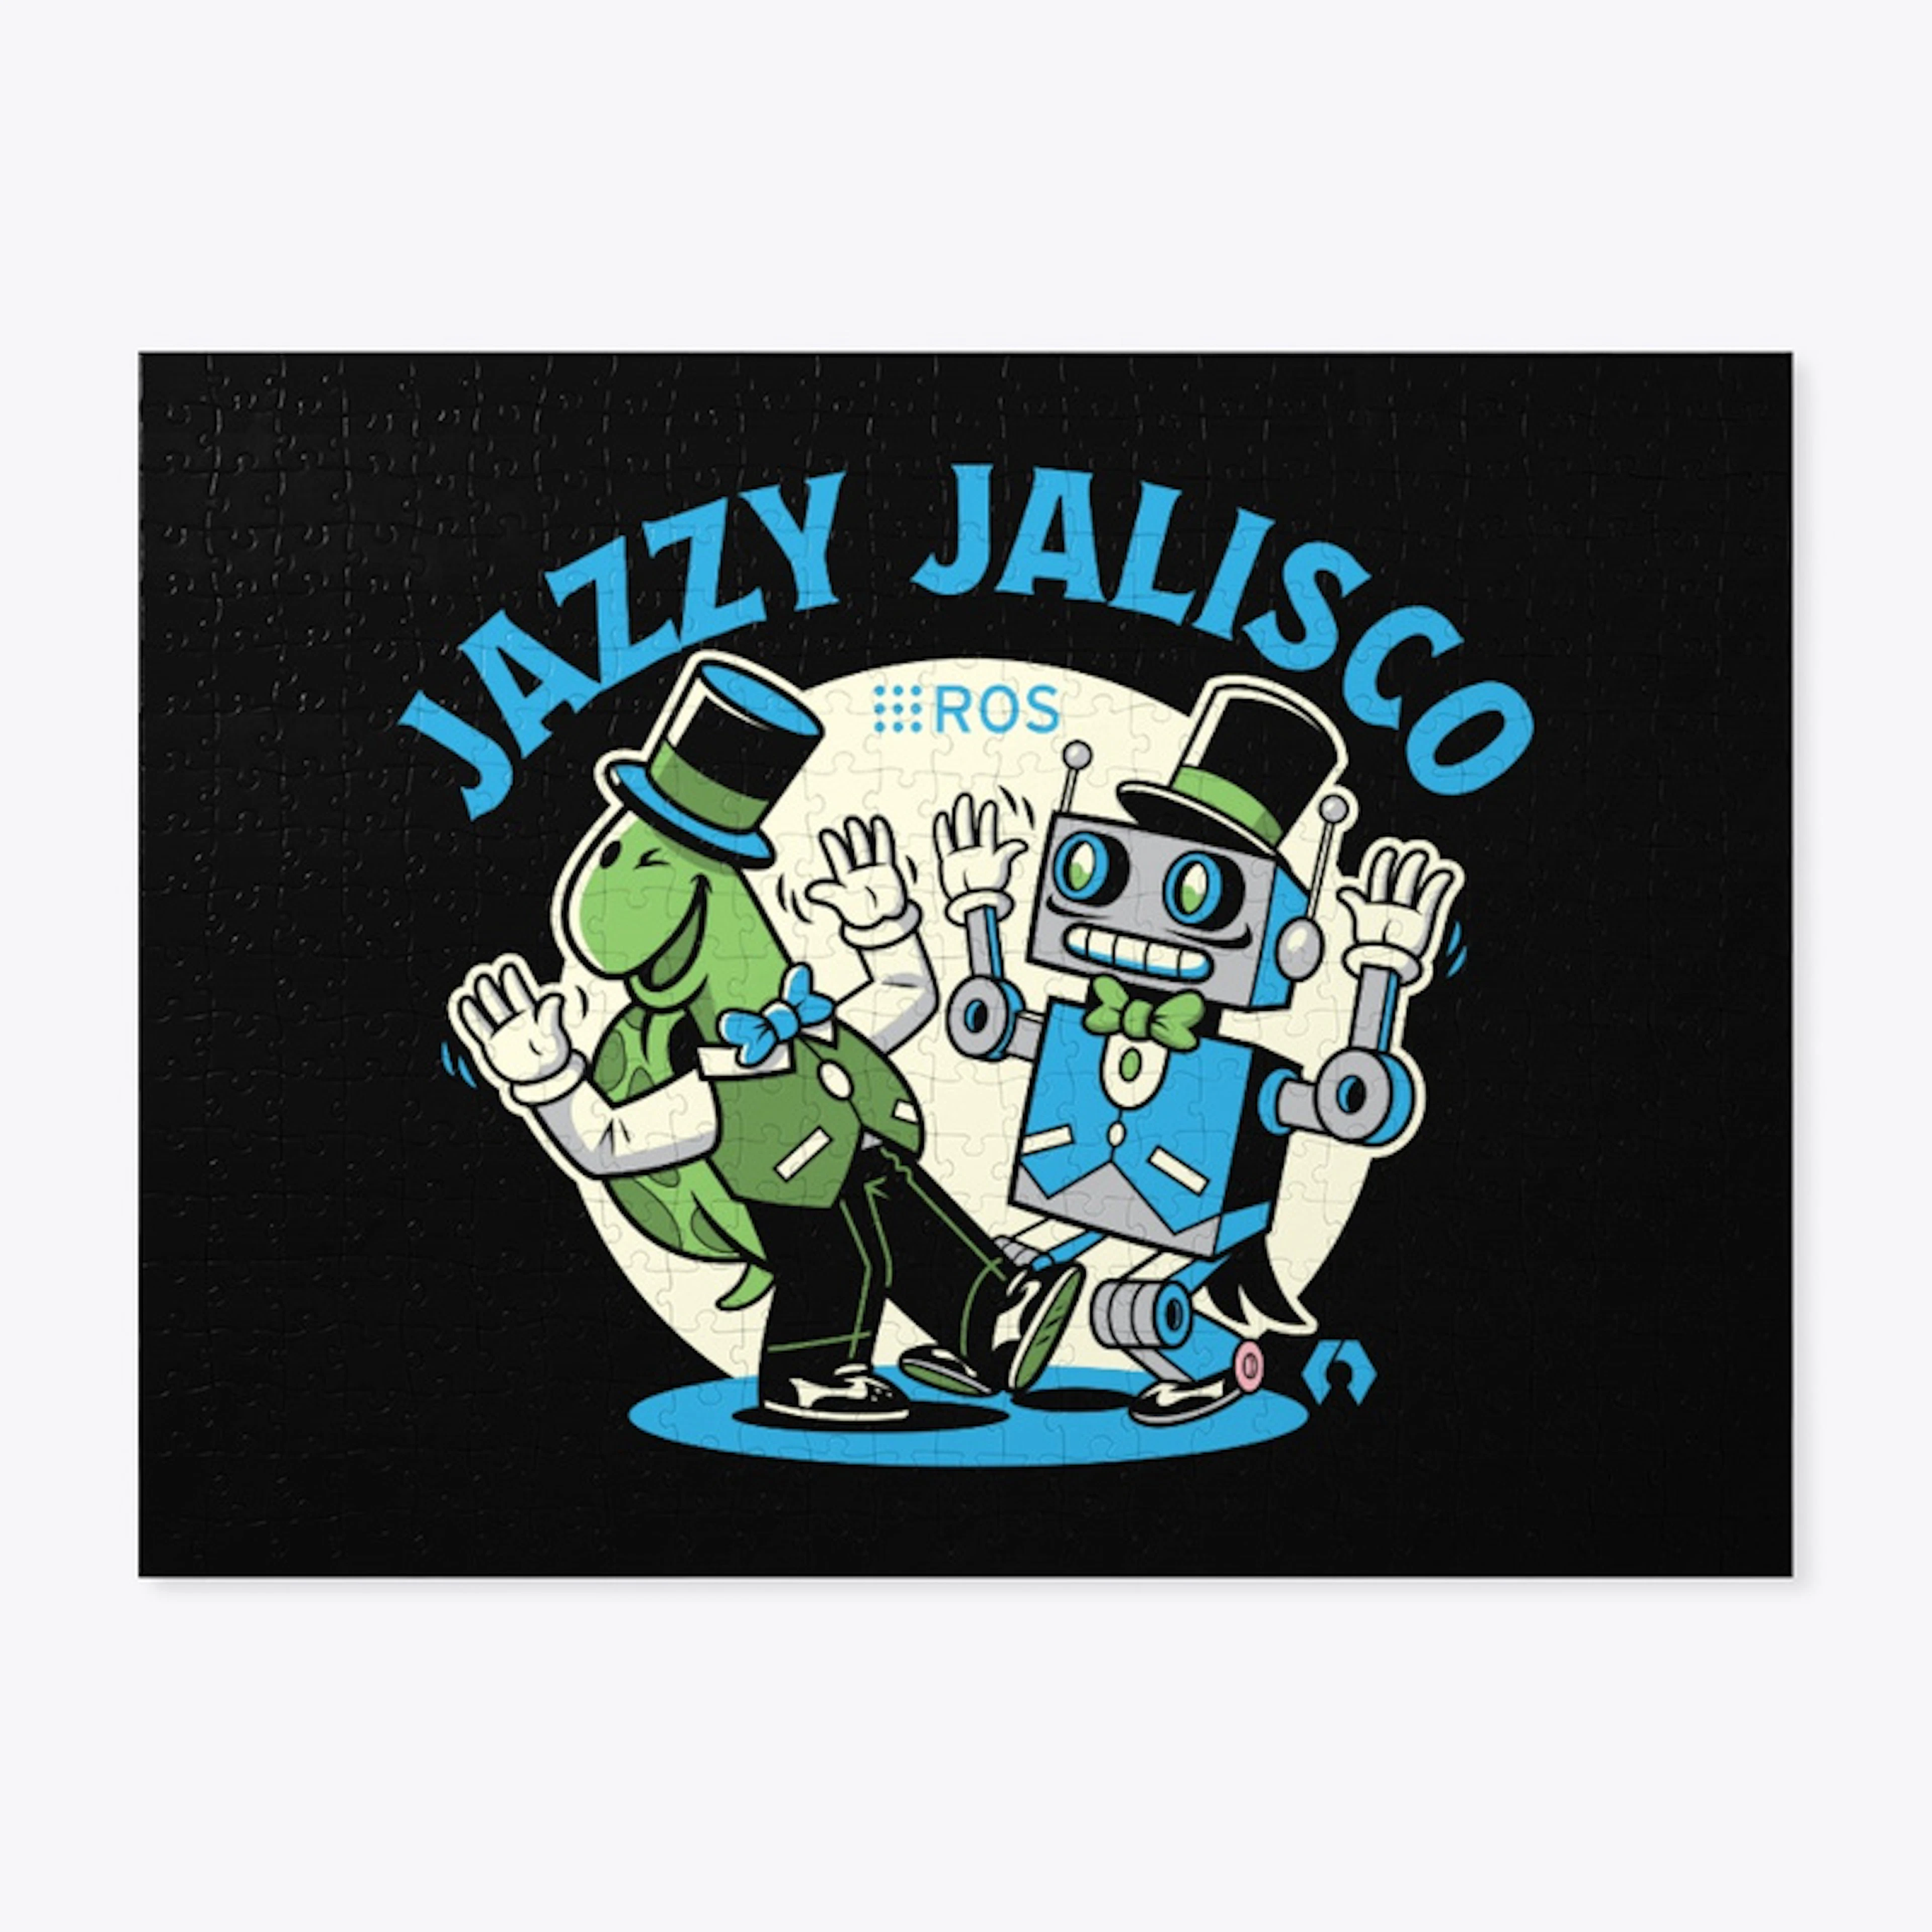 Jazzy Jalisco swag store